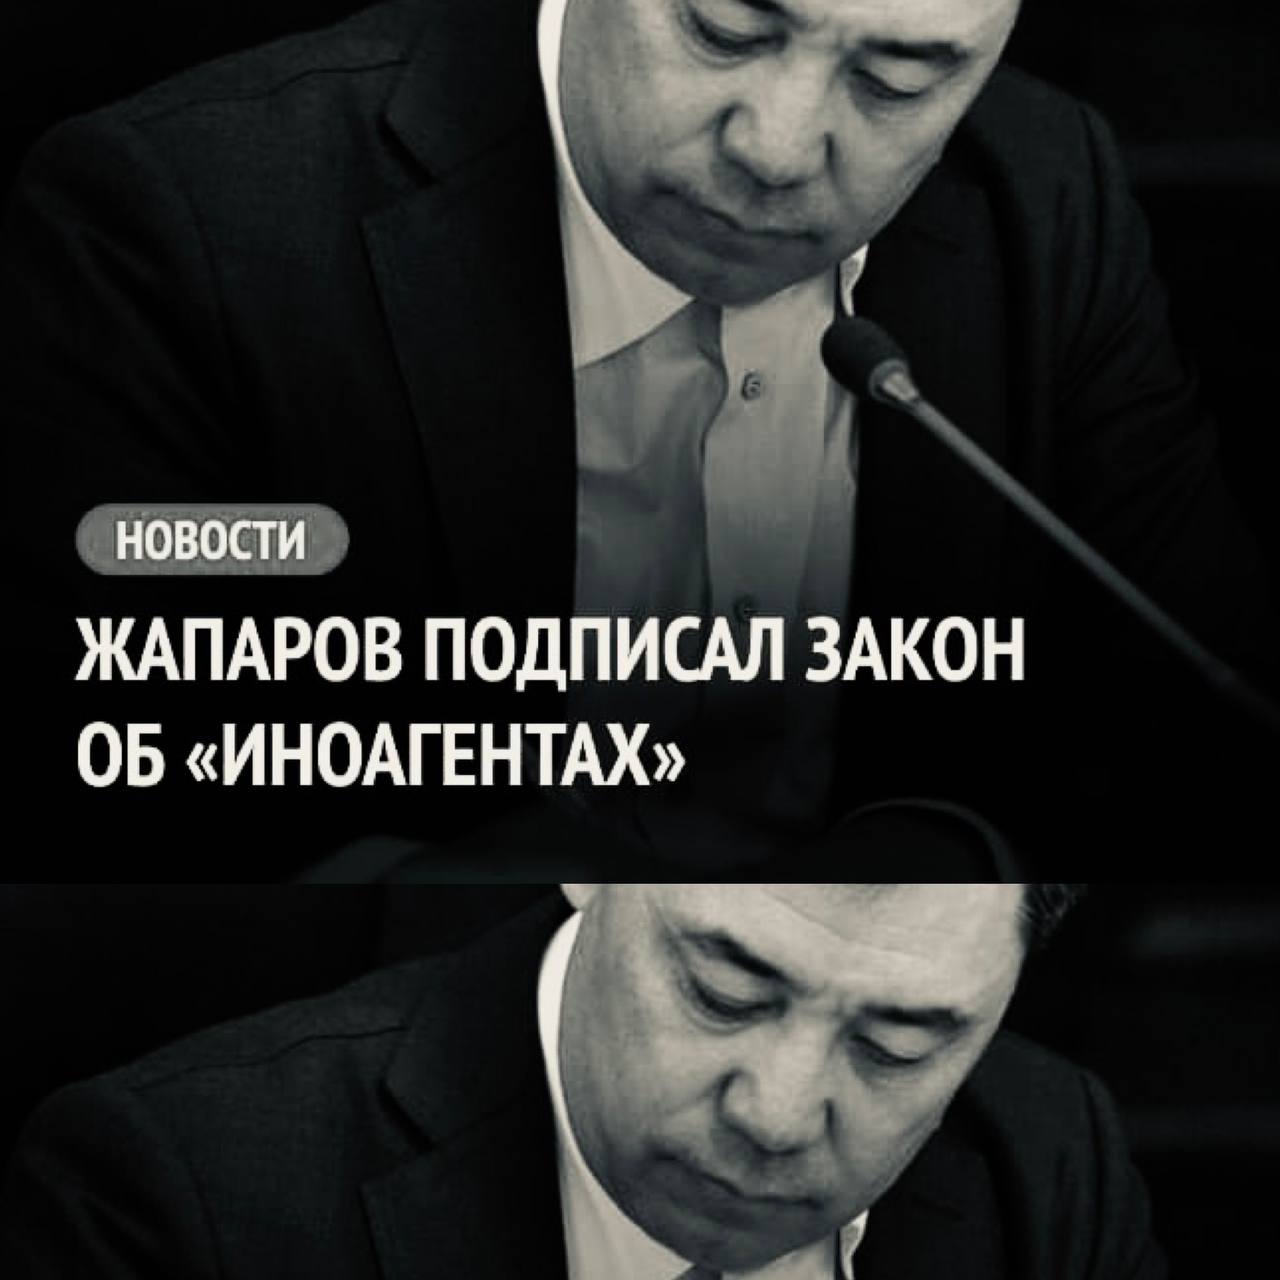 Обращение НКО — ответ на пост президента Кыргызской Республики